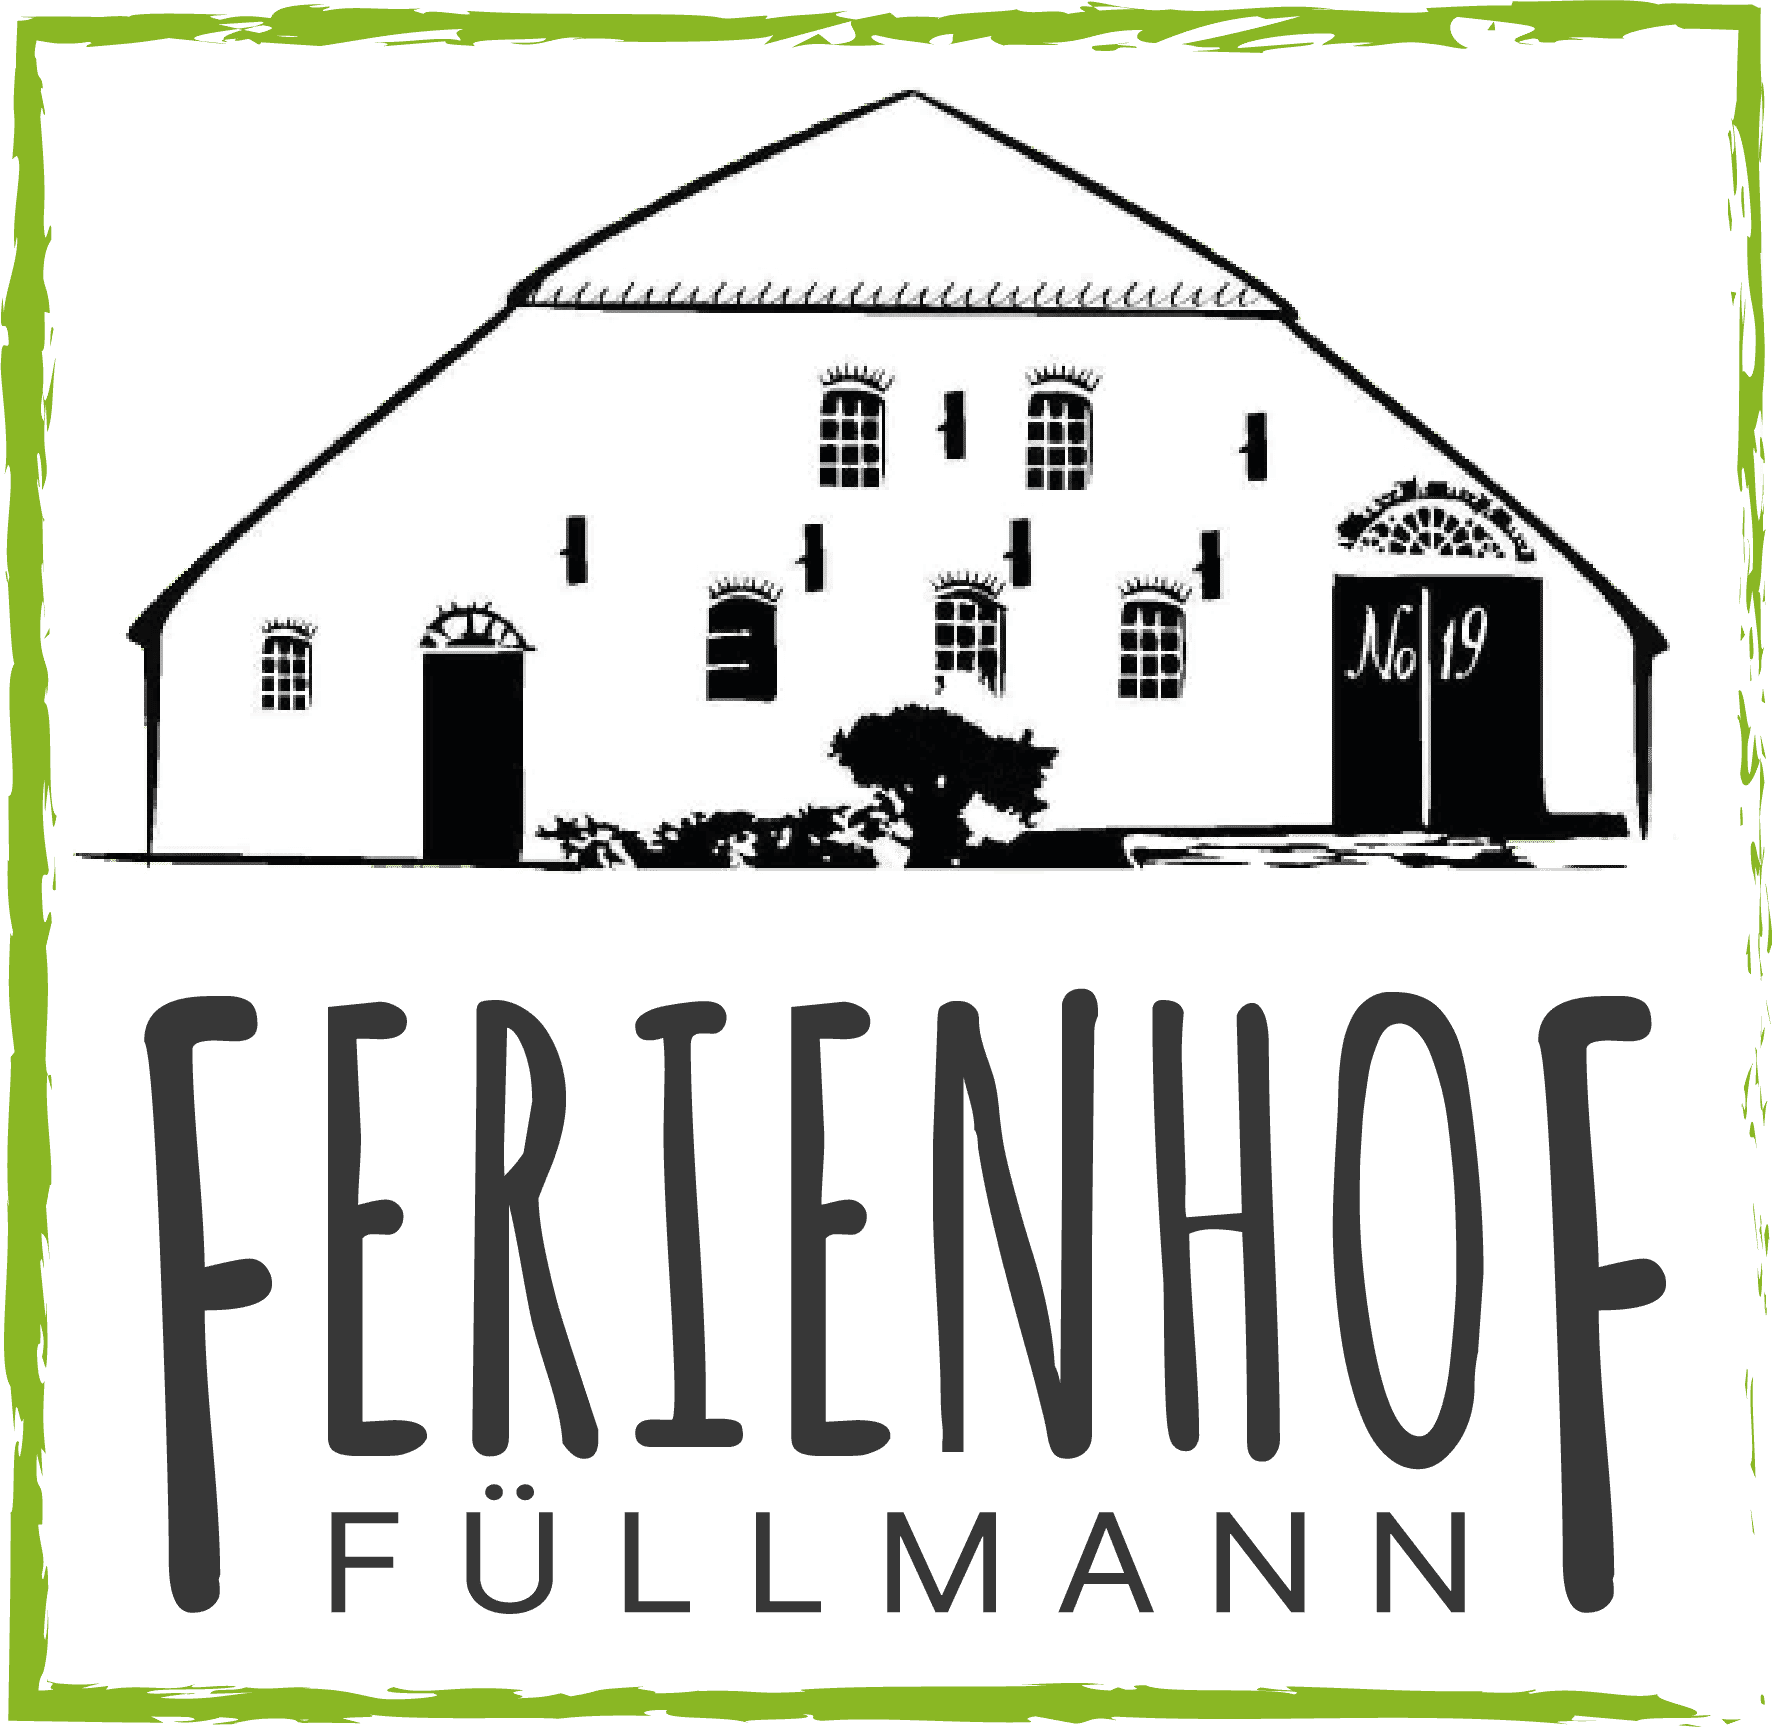 (c) Ferienhof-fuellmann.de